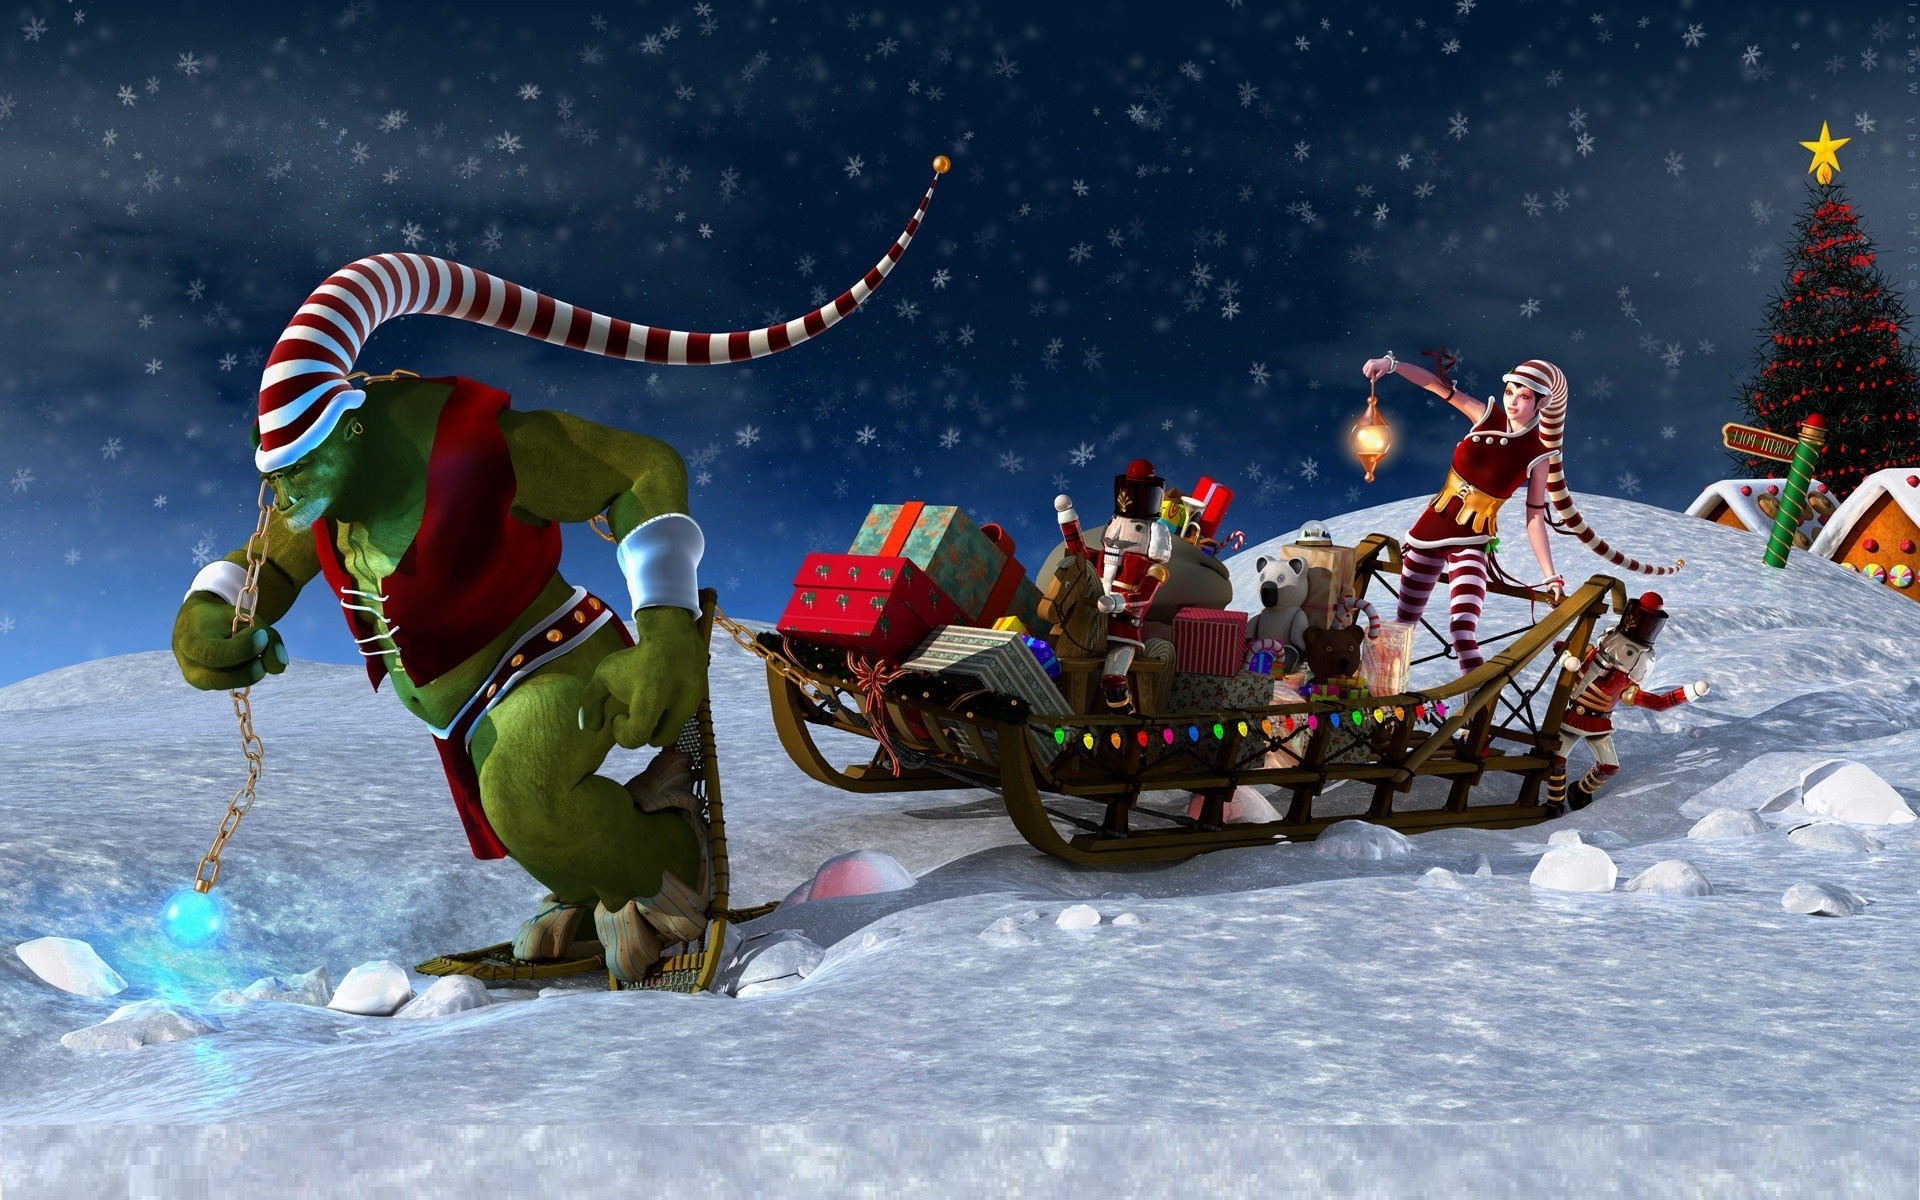 1920x1200 Animated Christmas Backgrounds For Desktop #17359 Wallpaper .